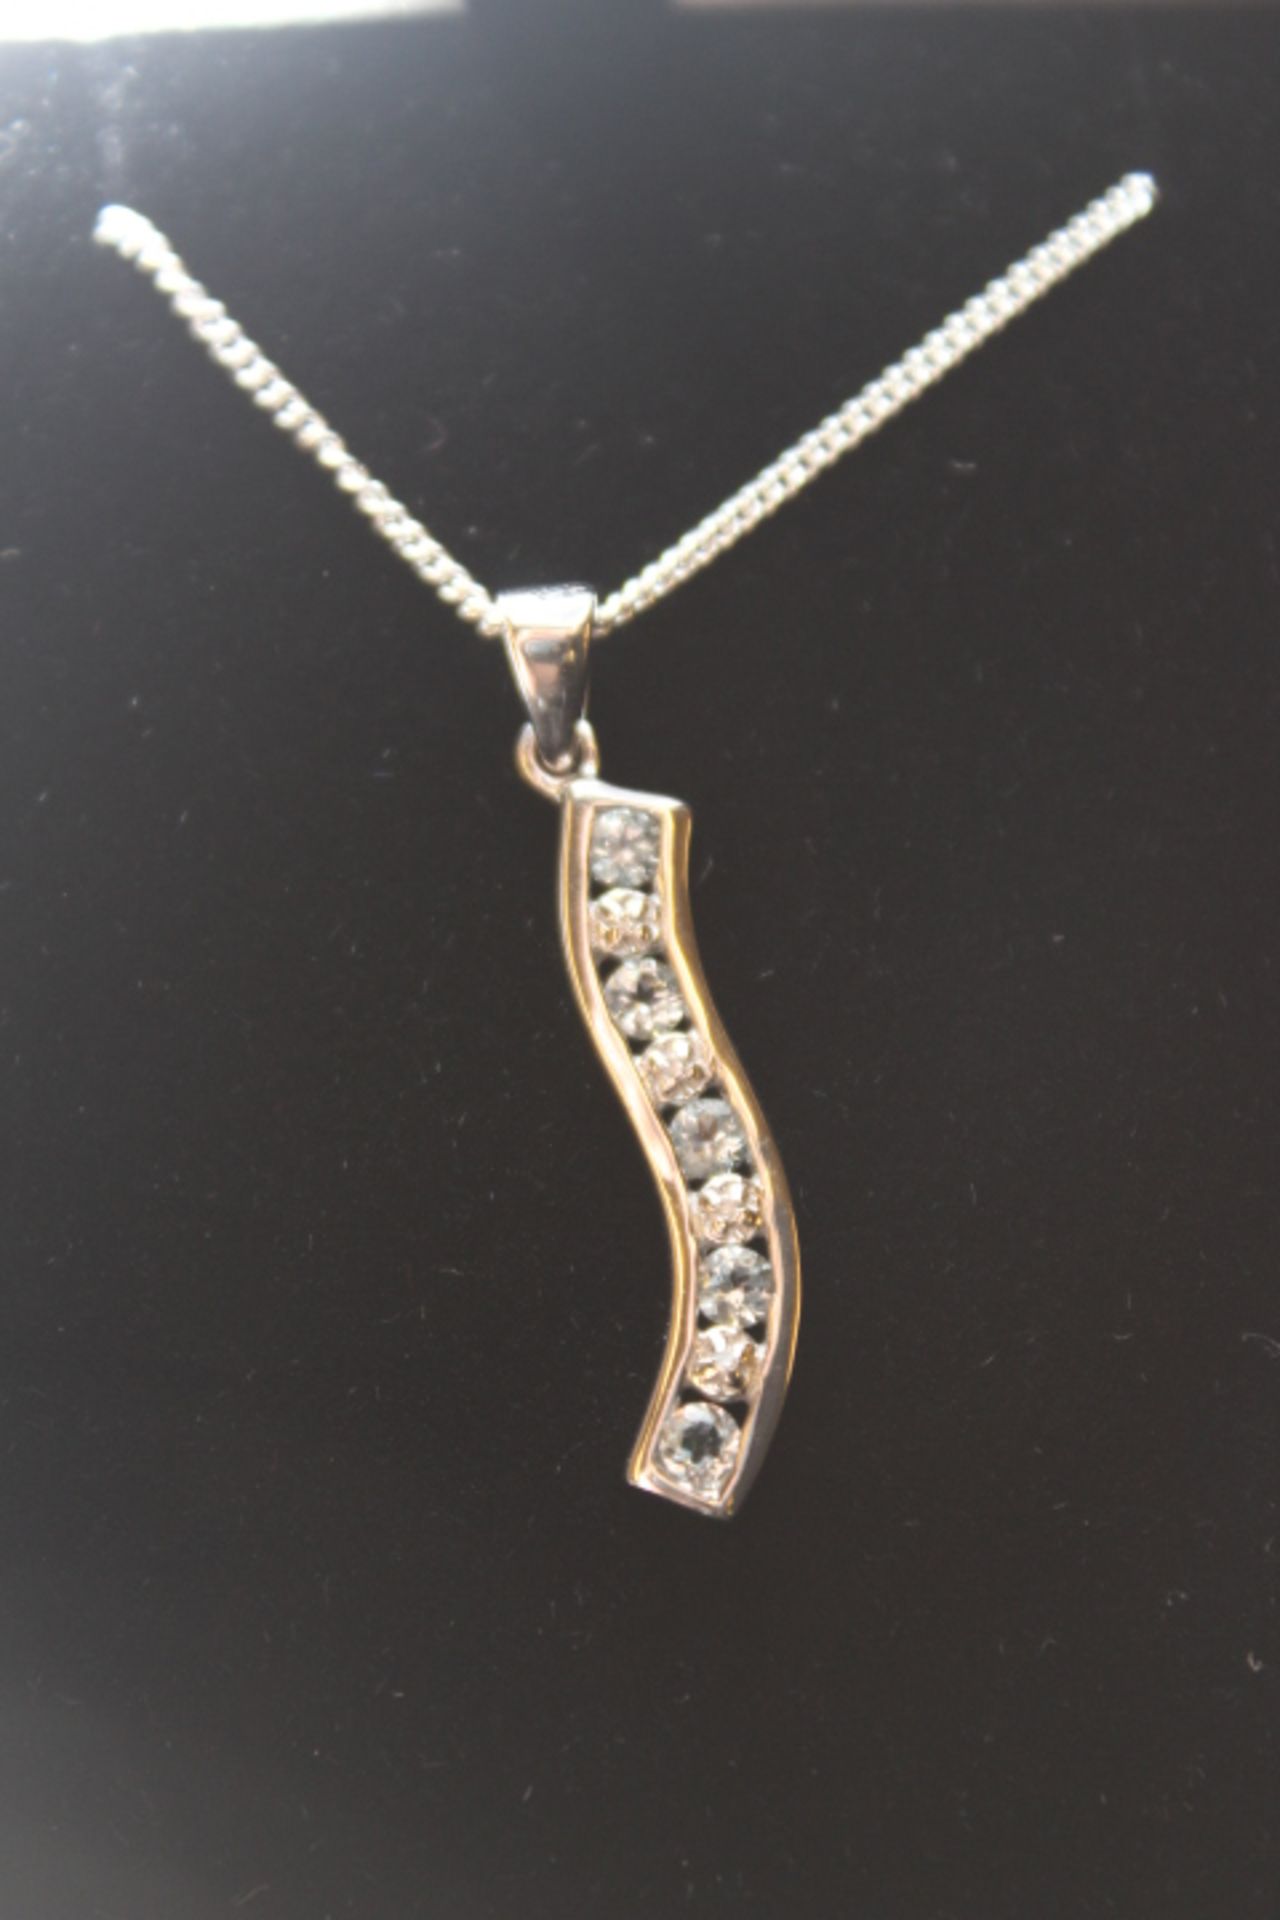 Wm diamond and aquamarine wavey style pendant and chain